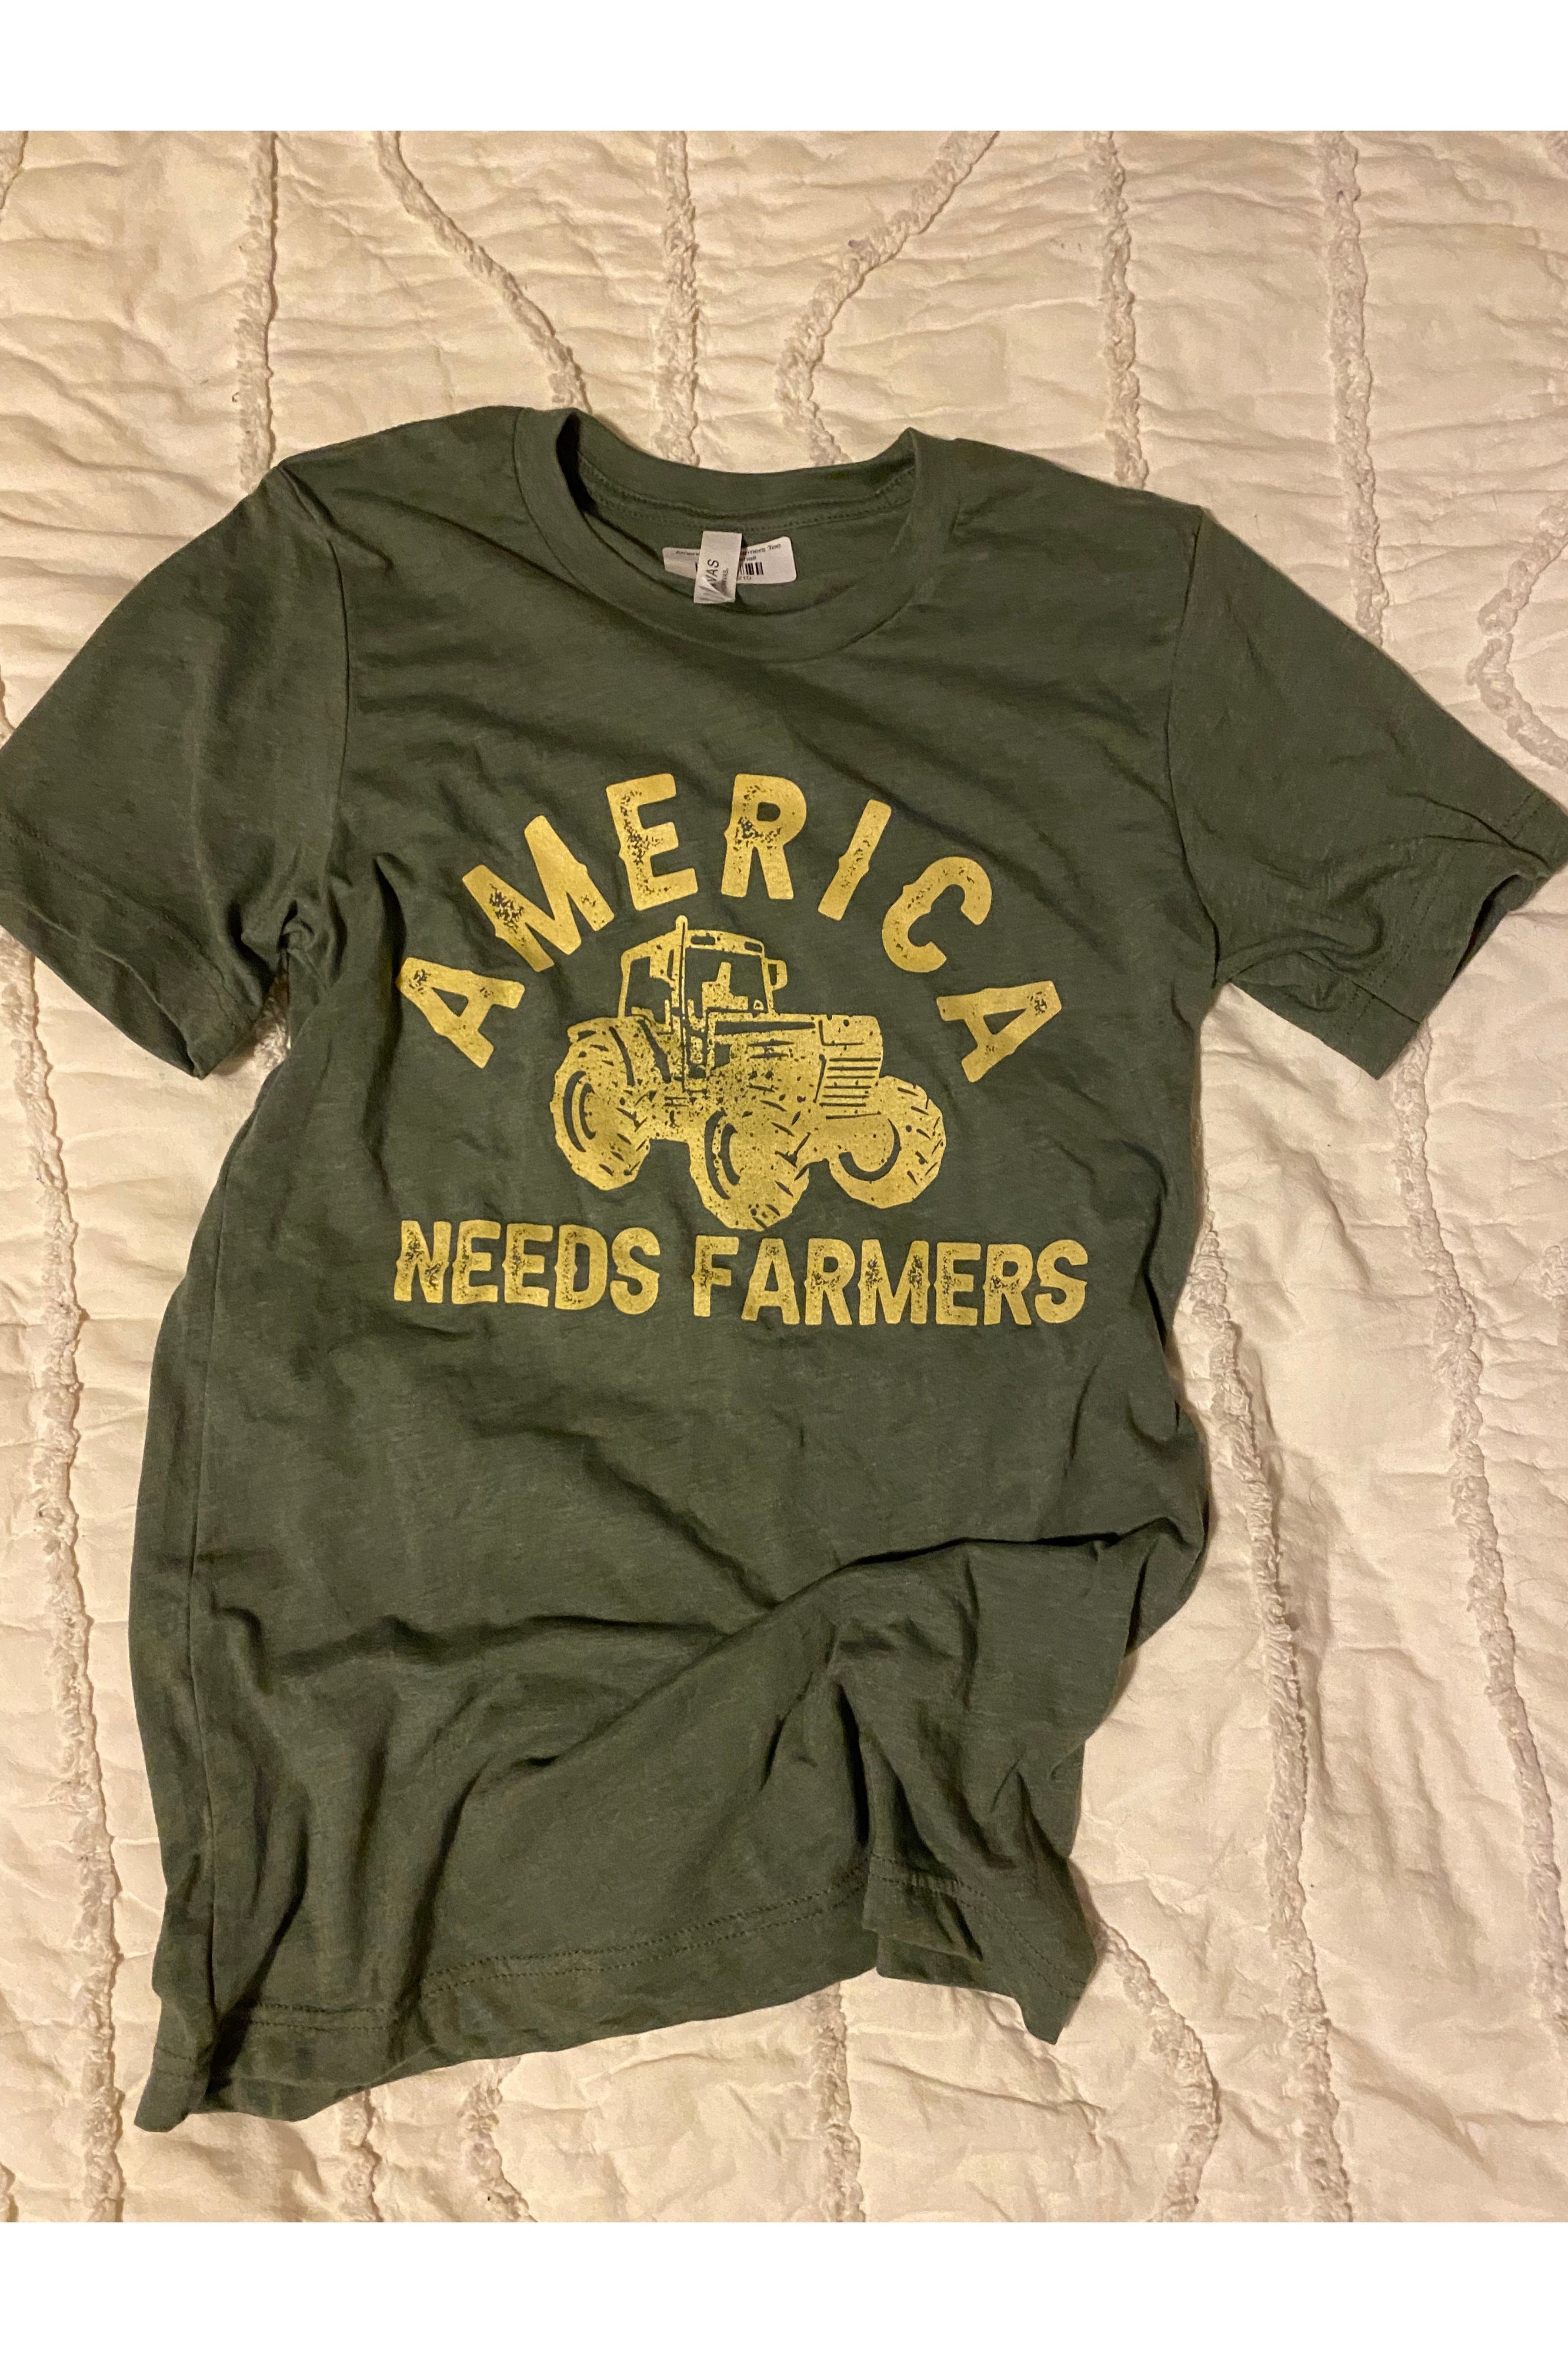 America Needs Farmers Tee